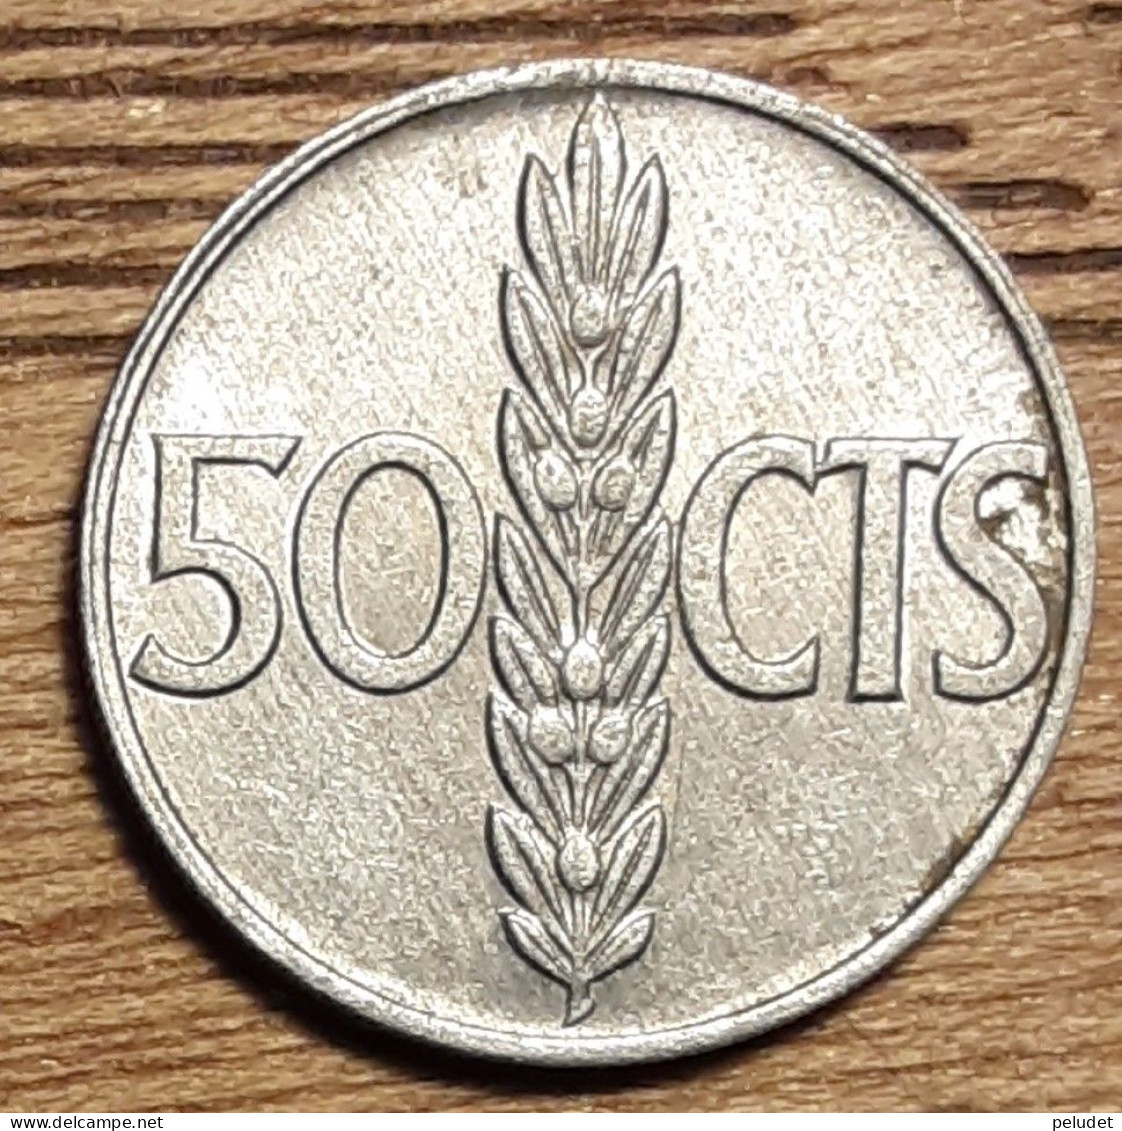 España Spain Espagne, 50 CTS CENTIMOS 1966 / 67* KM# 795 - 50 Céntimos